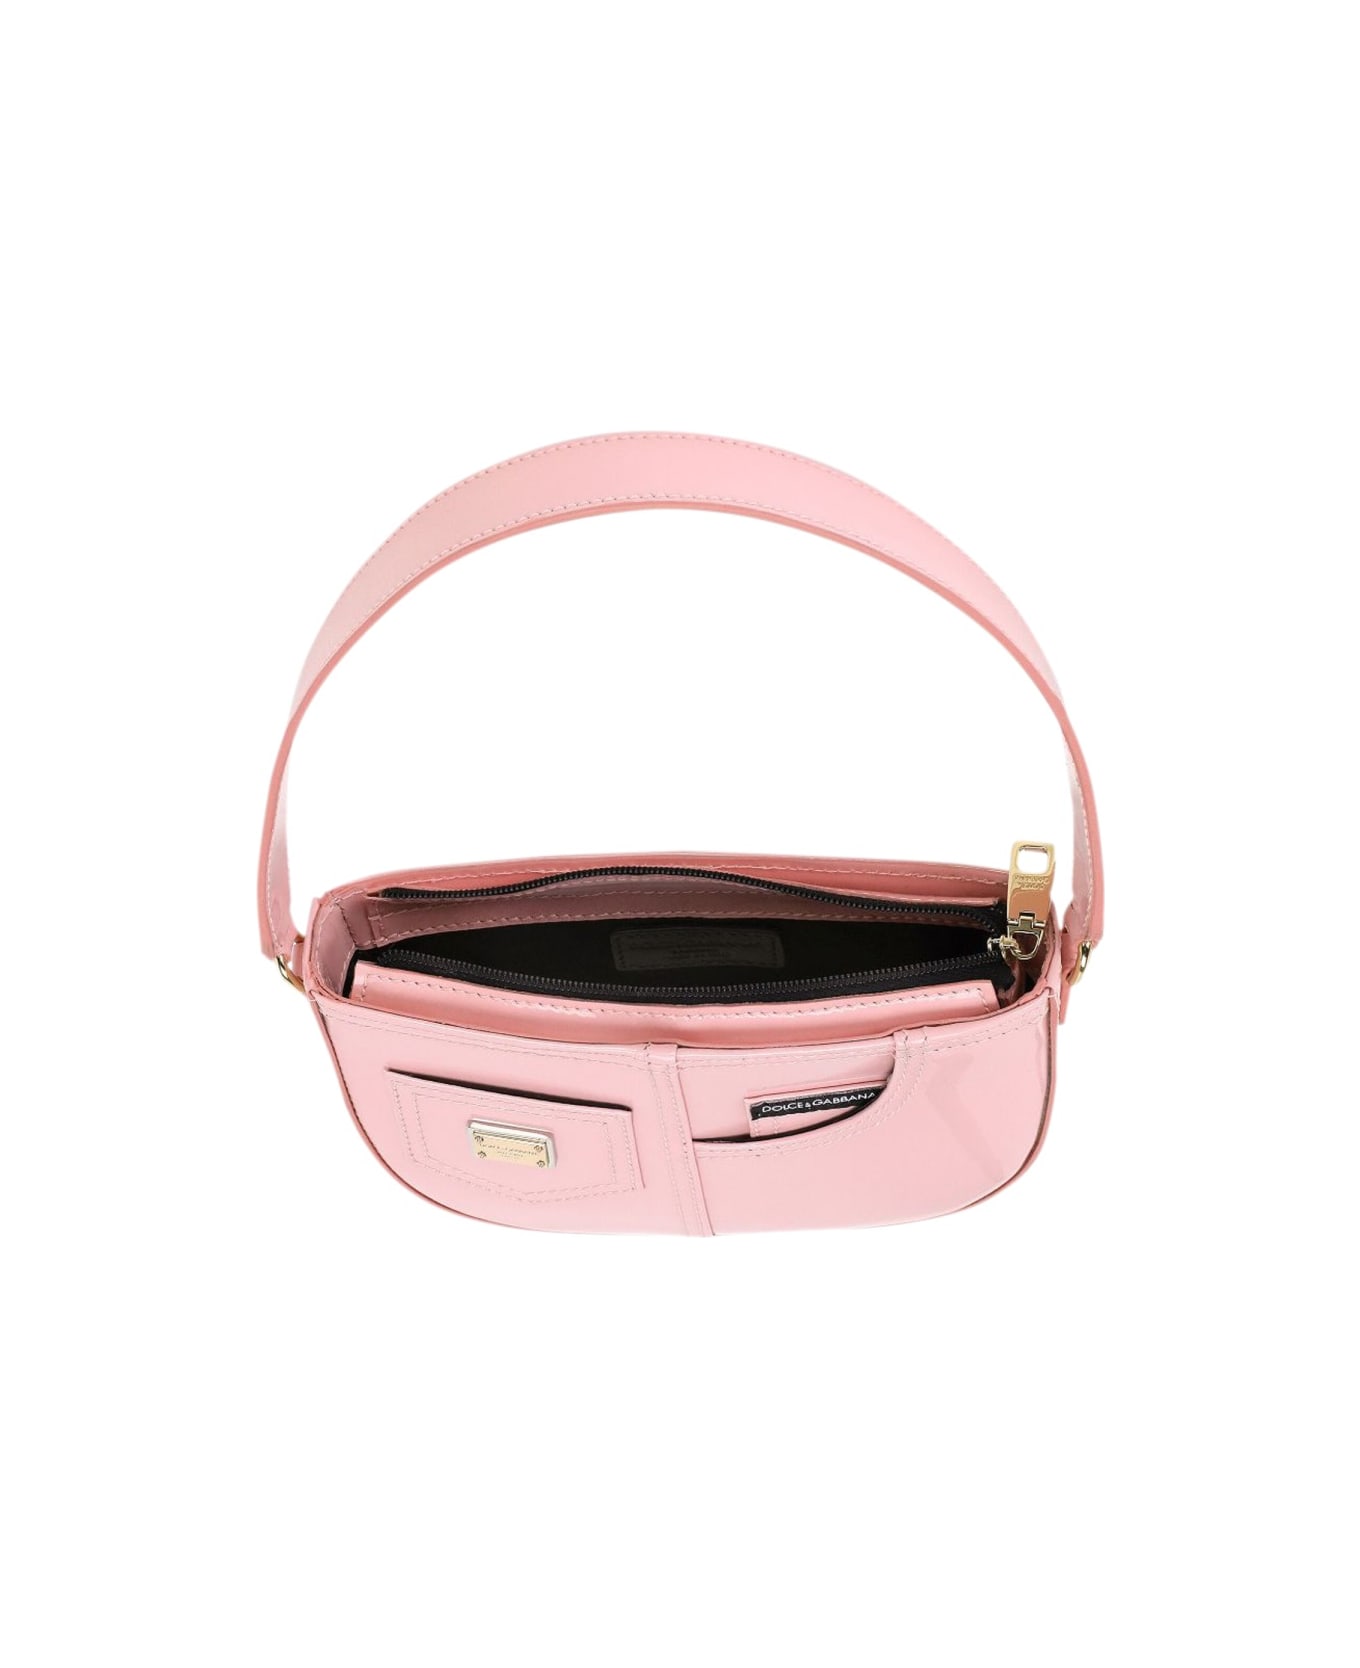 Dolce & Gabbana Patent Leather Bag - PINK